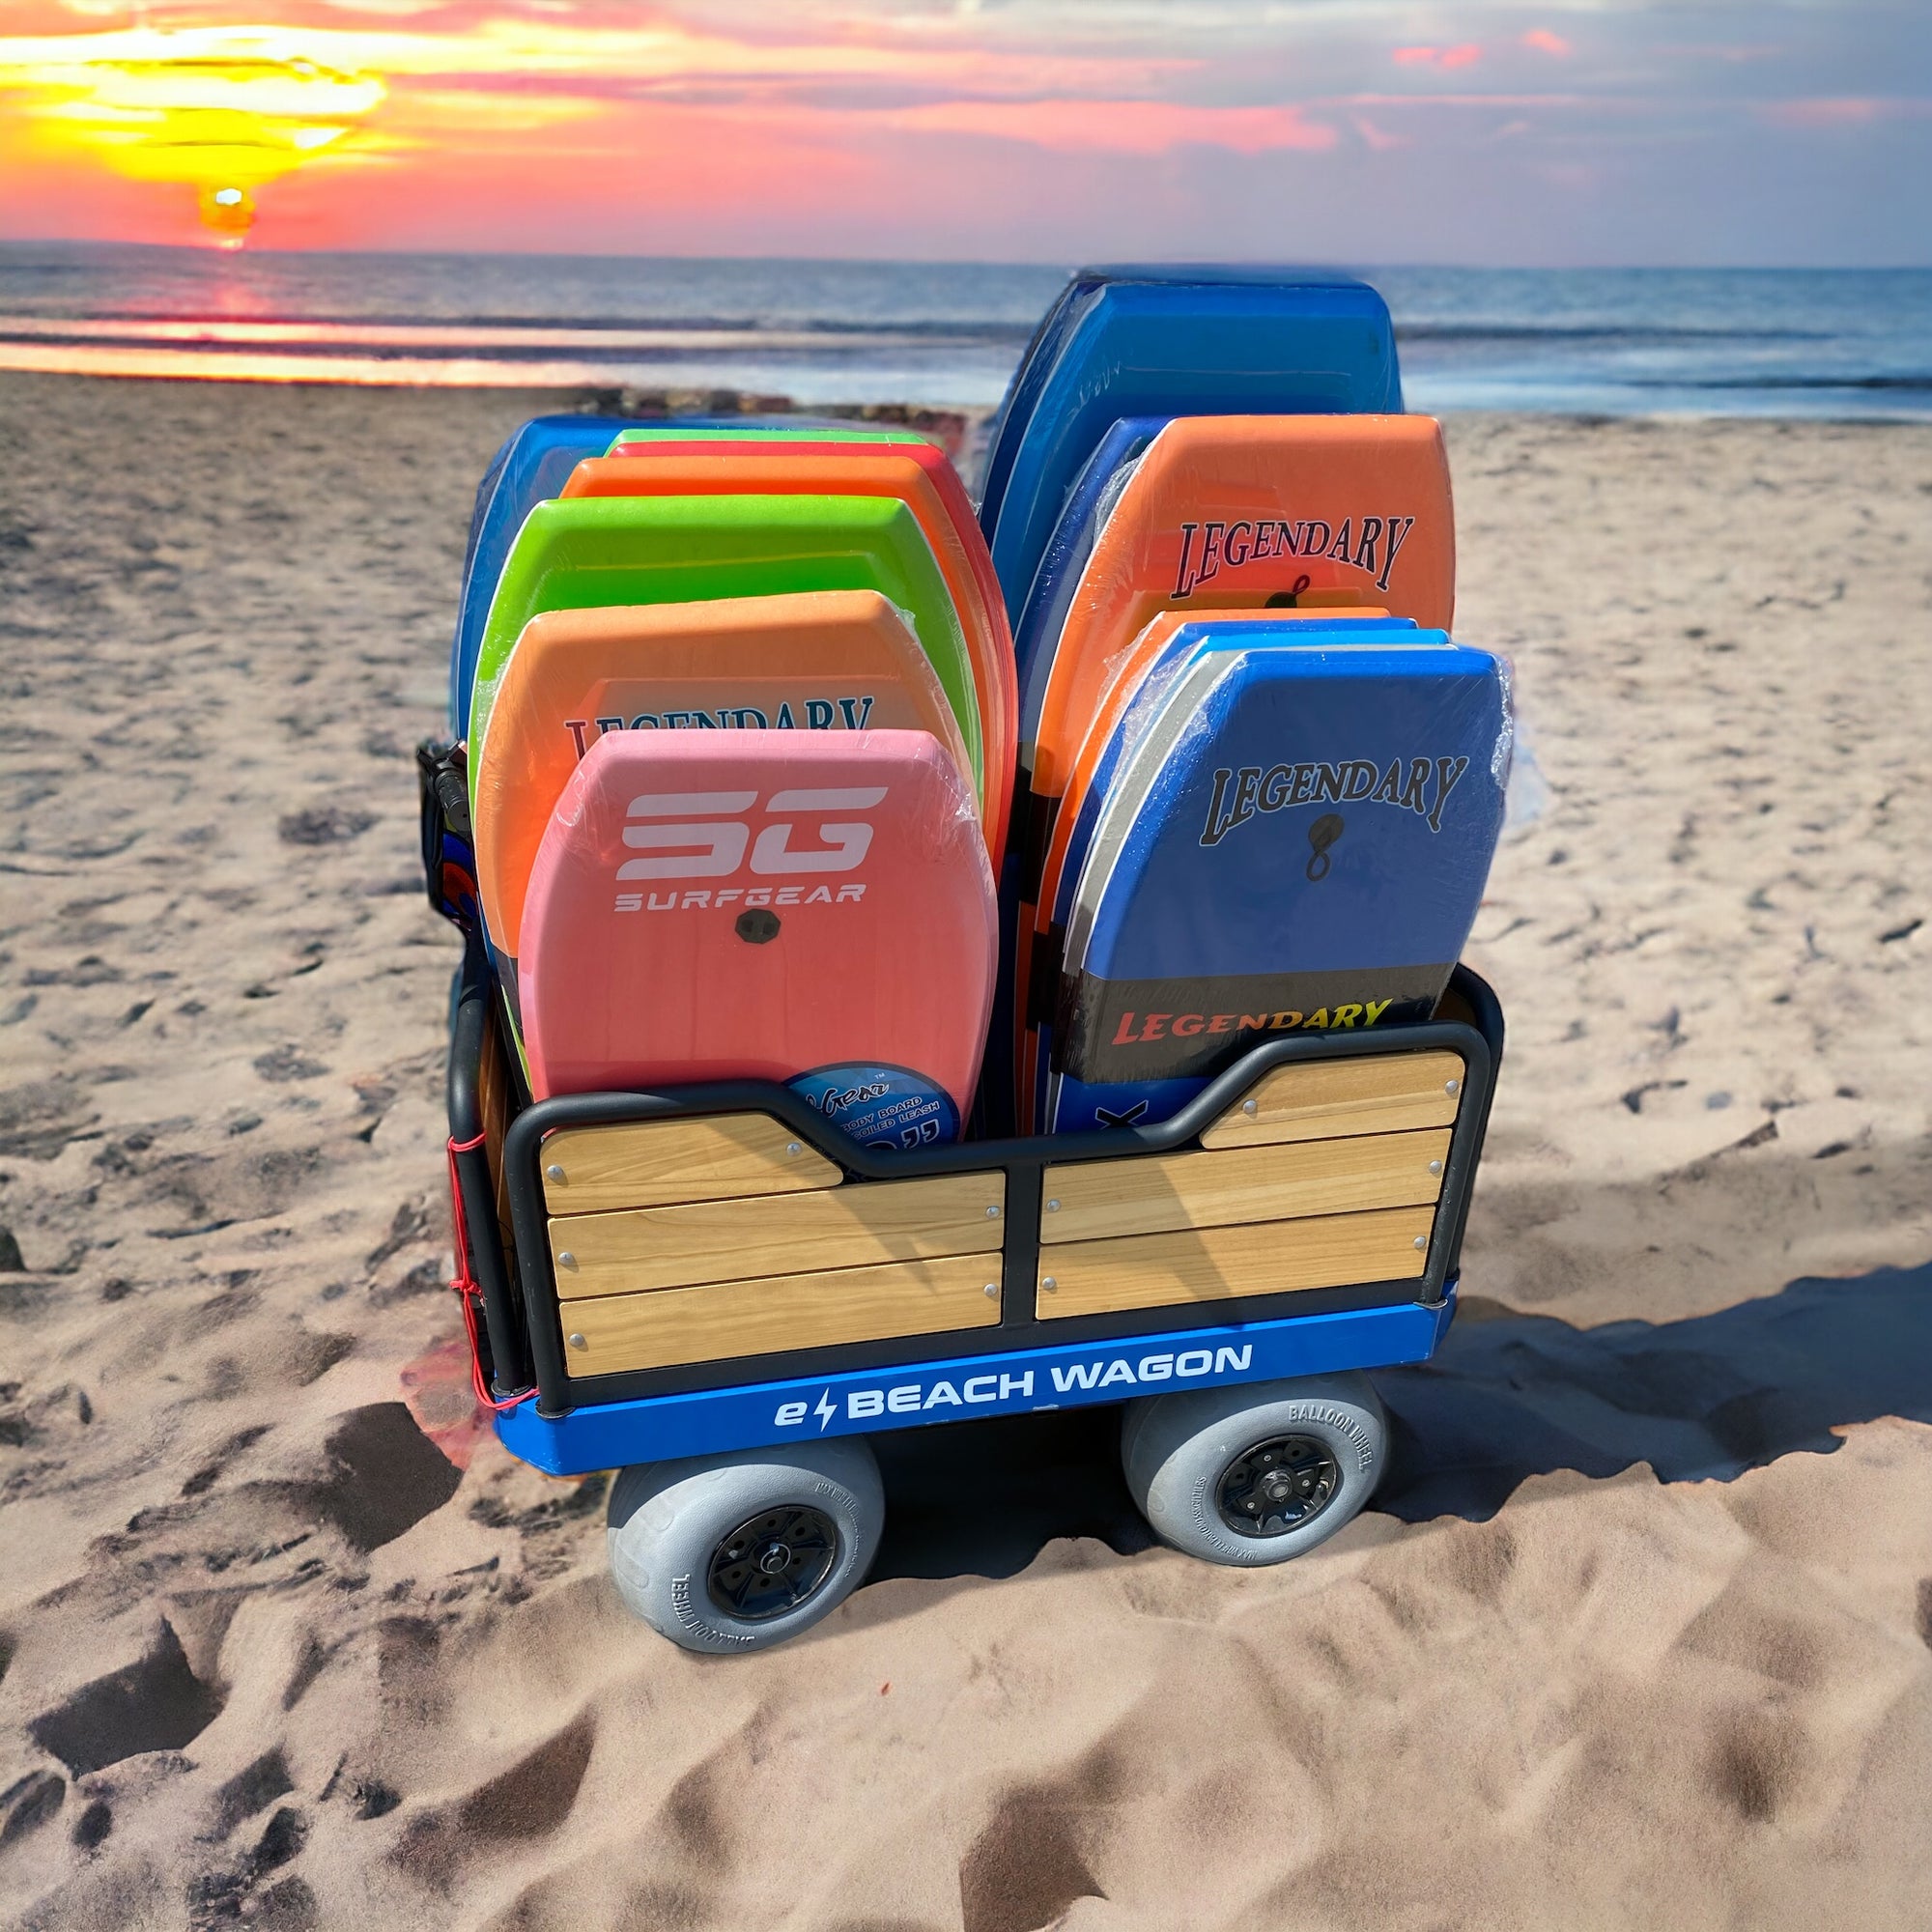 e-Beach Wagon stocked with beach chairs